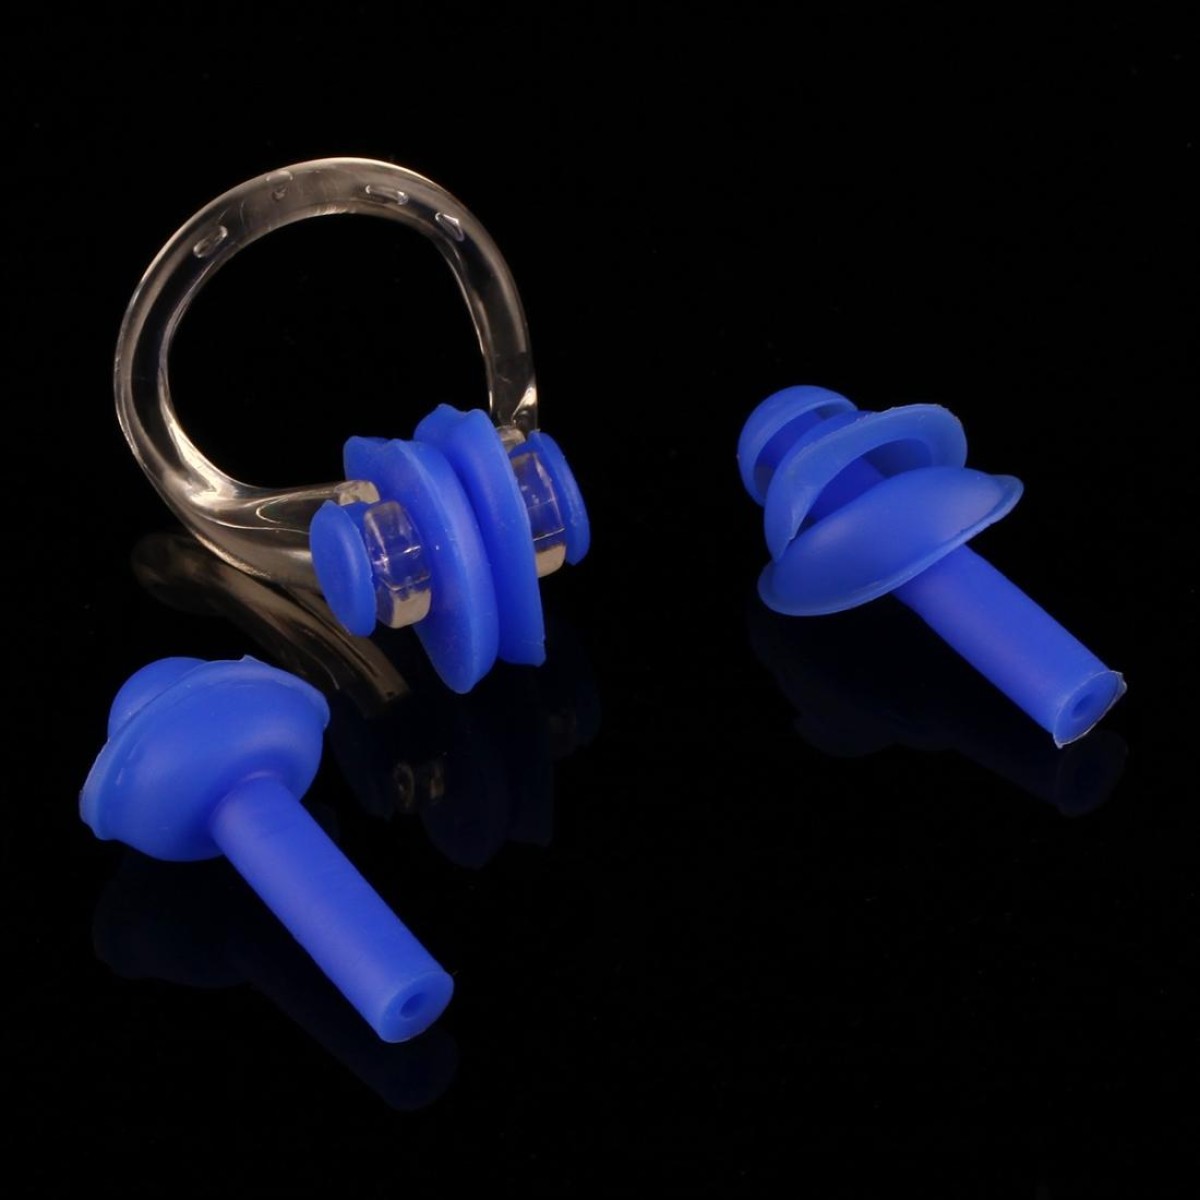 Soft Silicone Swimming Nose Clip and Ear Plug Set Earplug, Random Color Delivery(Blue)